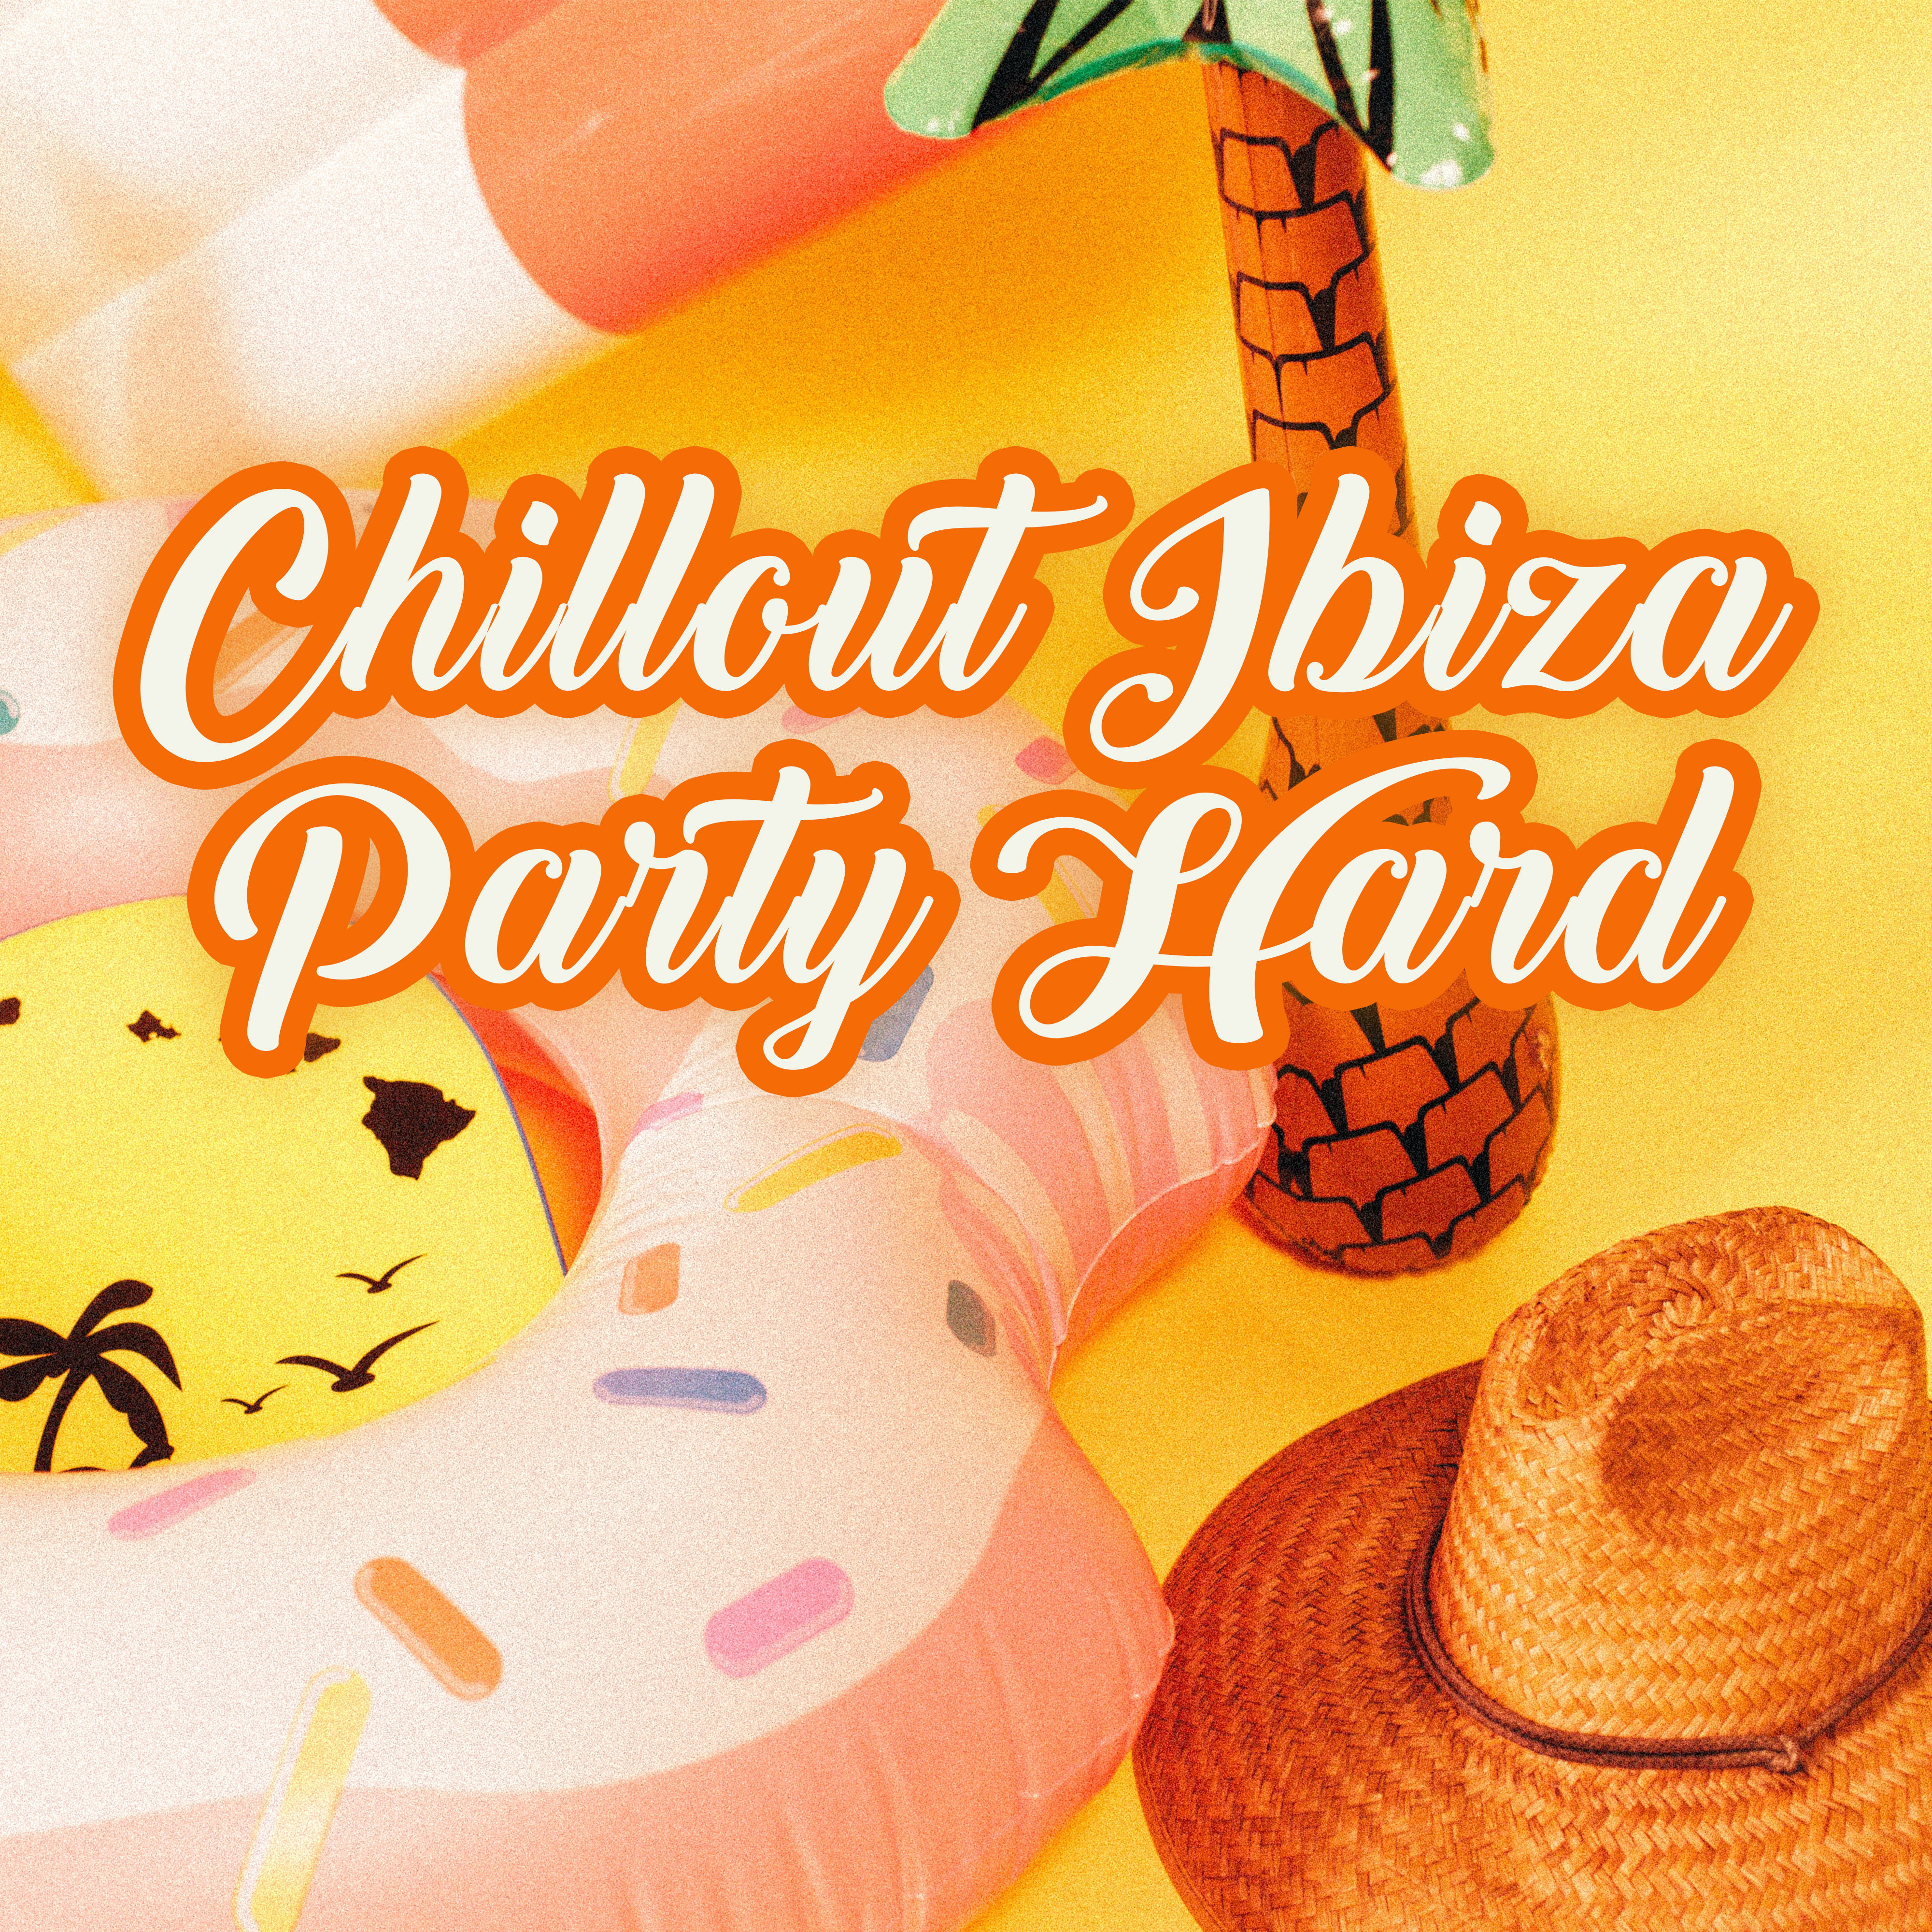 Chillout Ibiza Party Hard